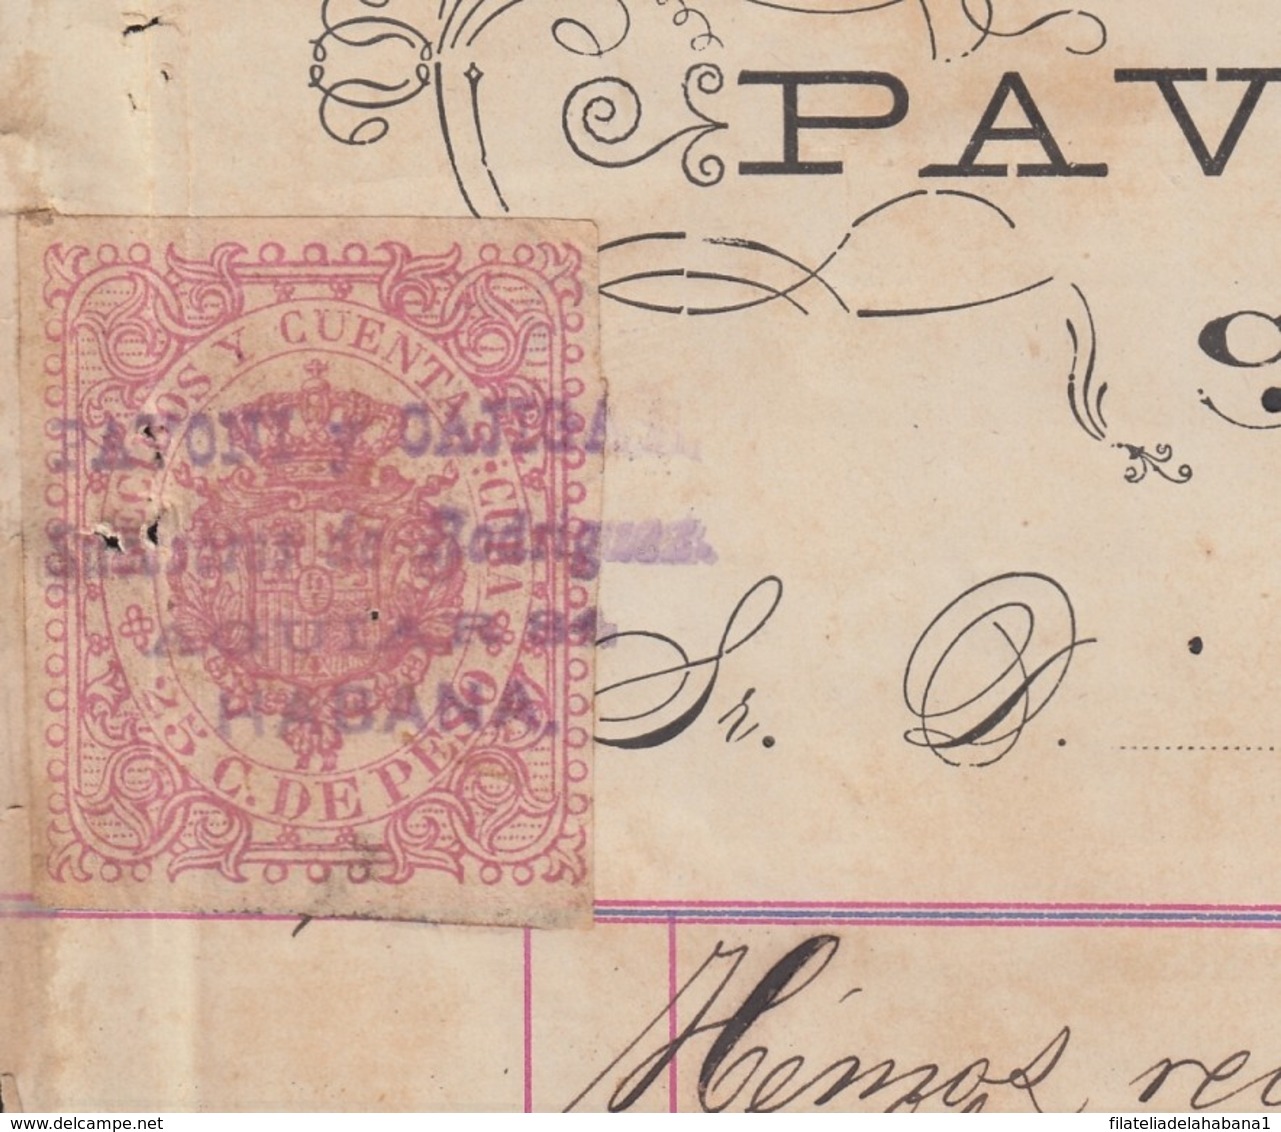 REC-134 CUBA SPAIN ESPAÑA (LG1642) RECIBOS REVENUE 1884. SASTRERIA PAVONI COSTUMES HARDWARE INVOICE. - Portomarken